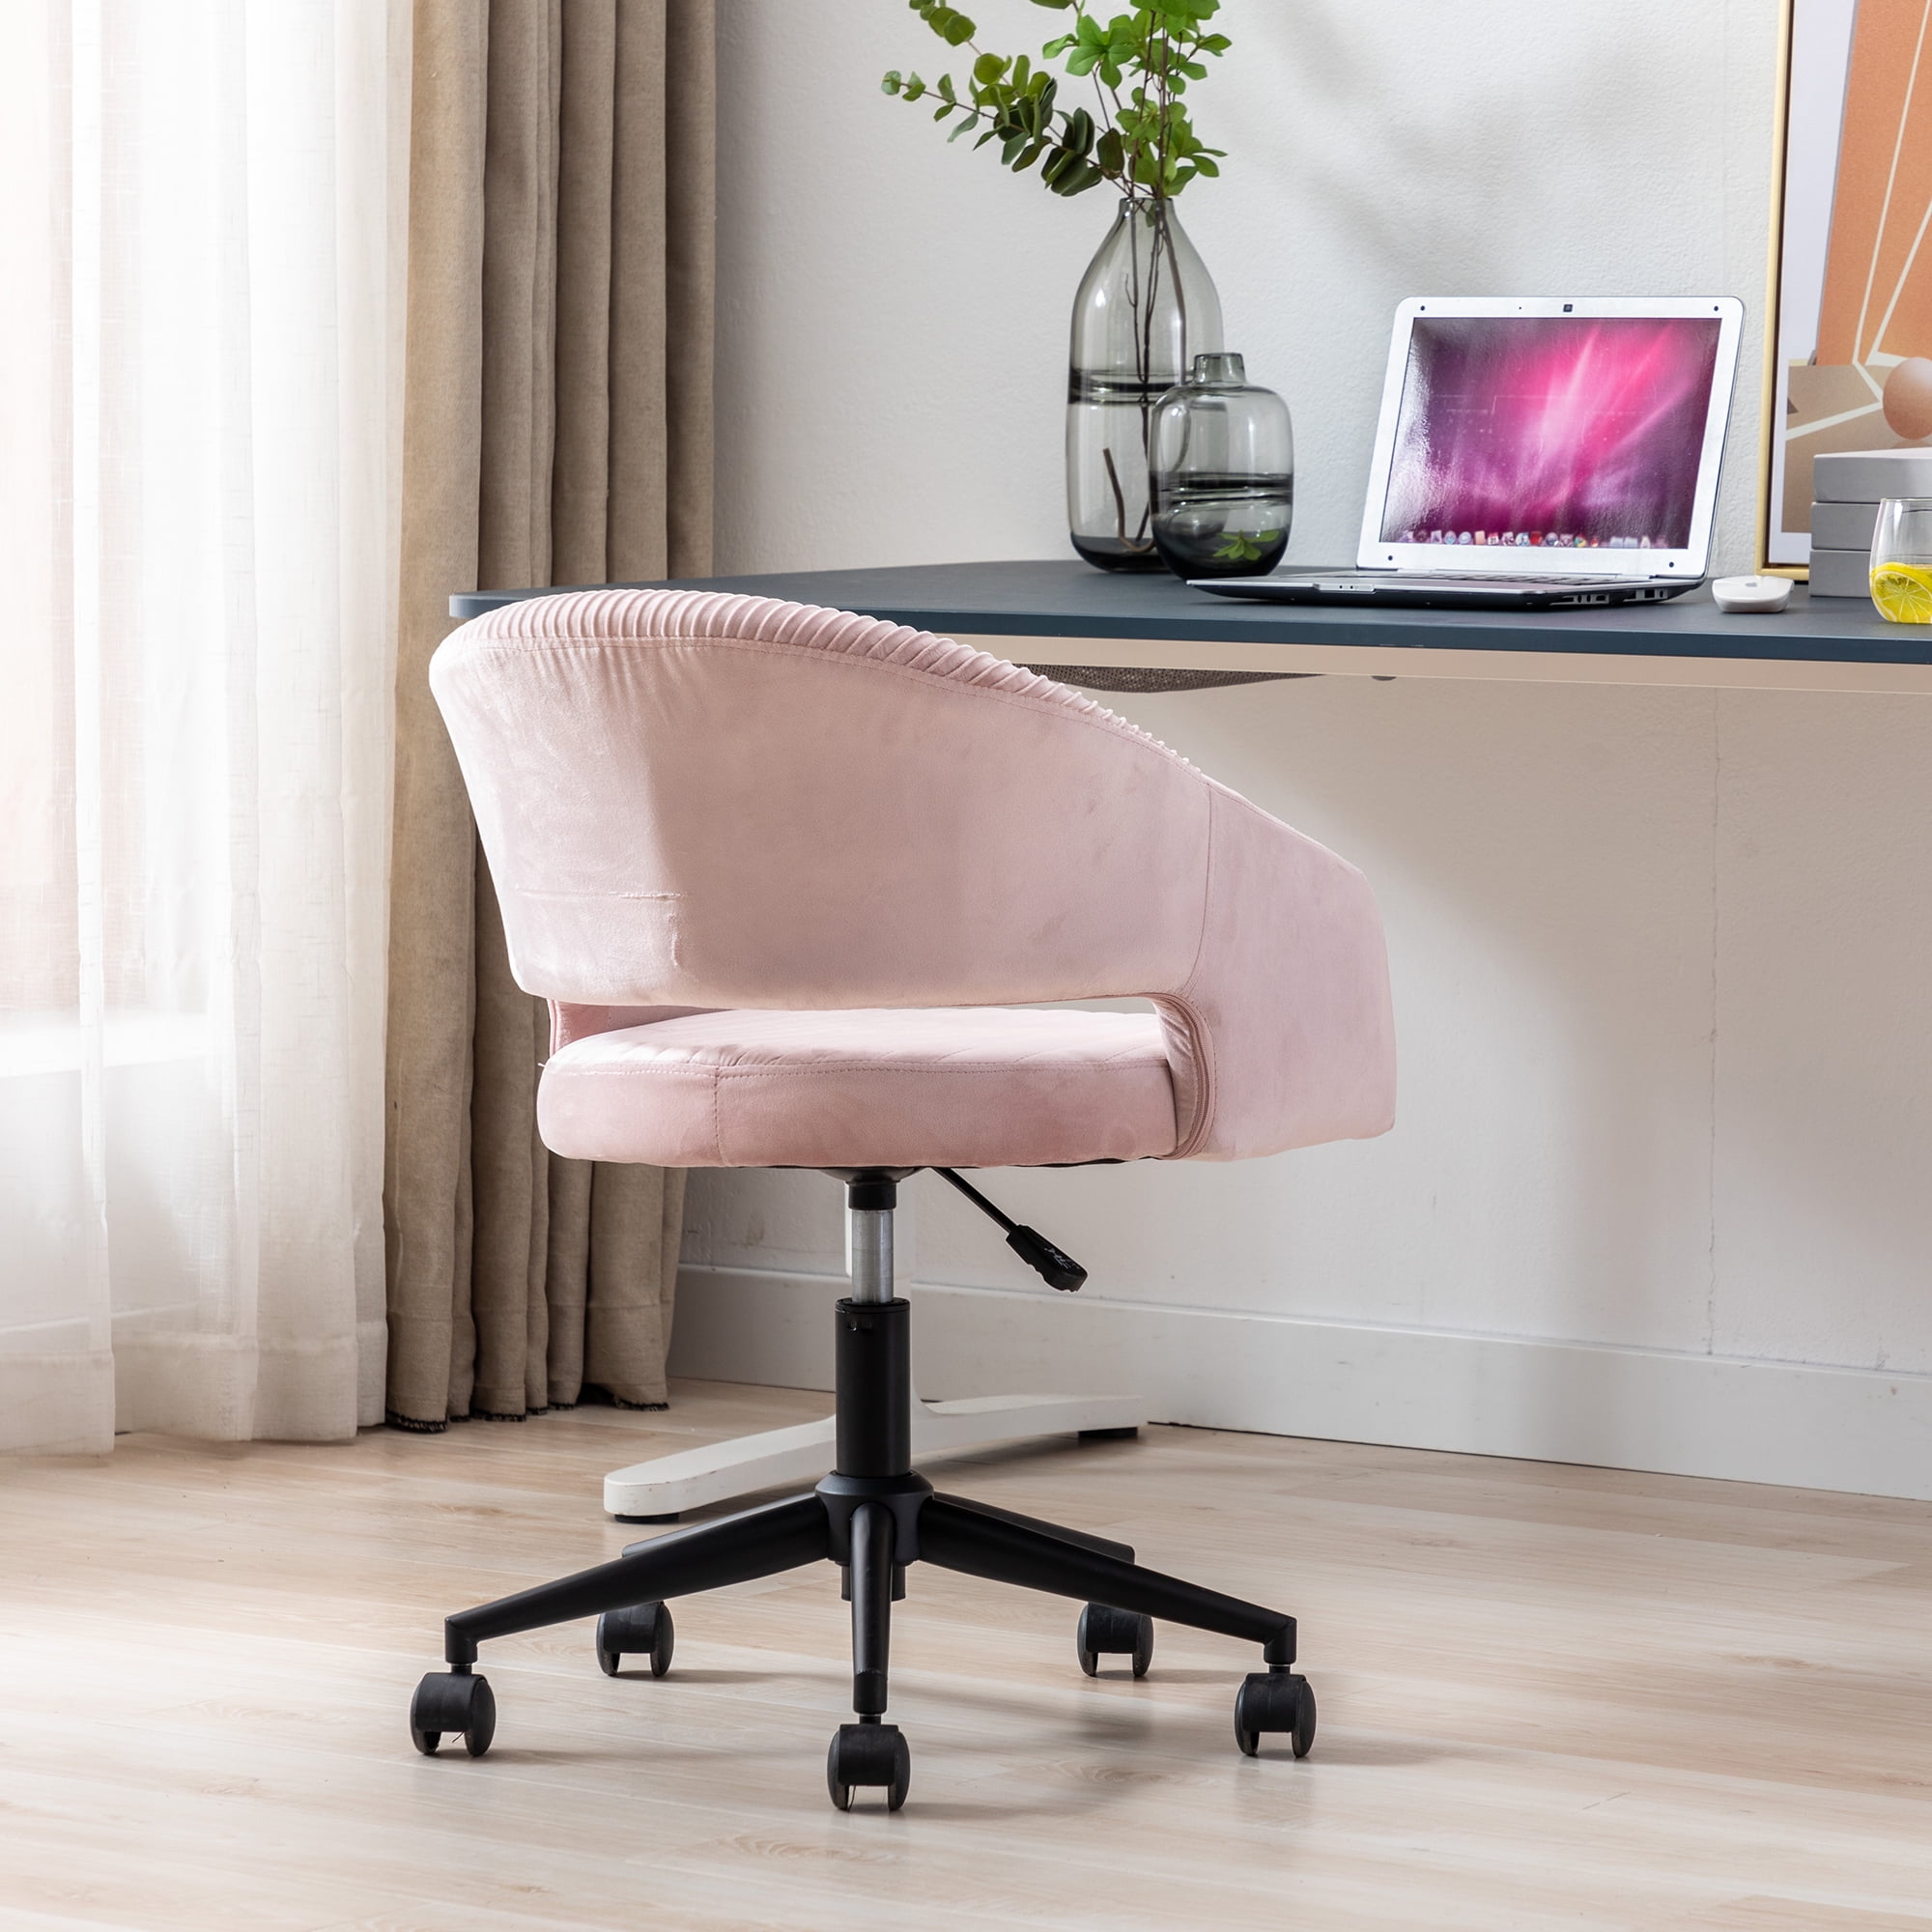 Adjustable Cushioned Chair Swivel Stool Desk Office Bedroom Dining Vanity Pink 